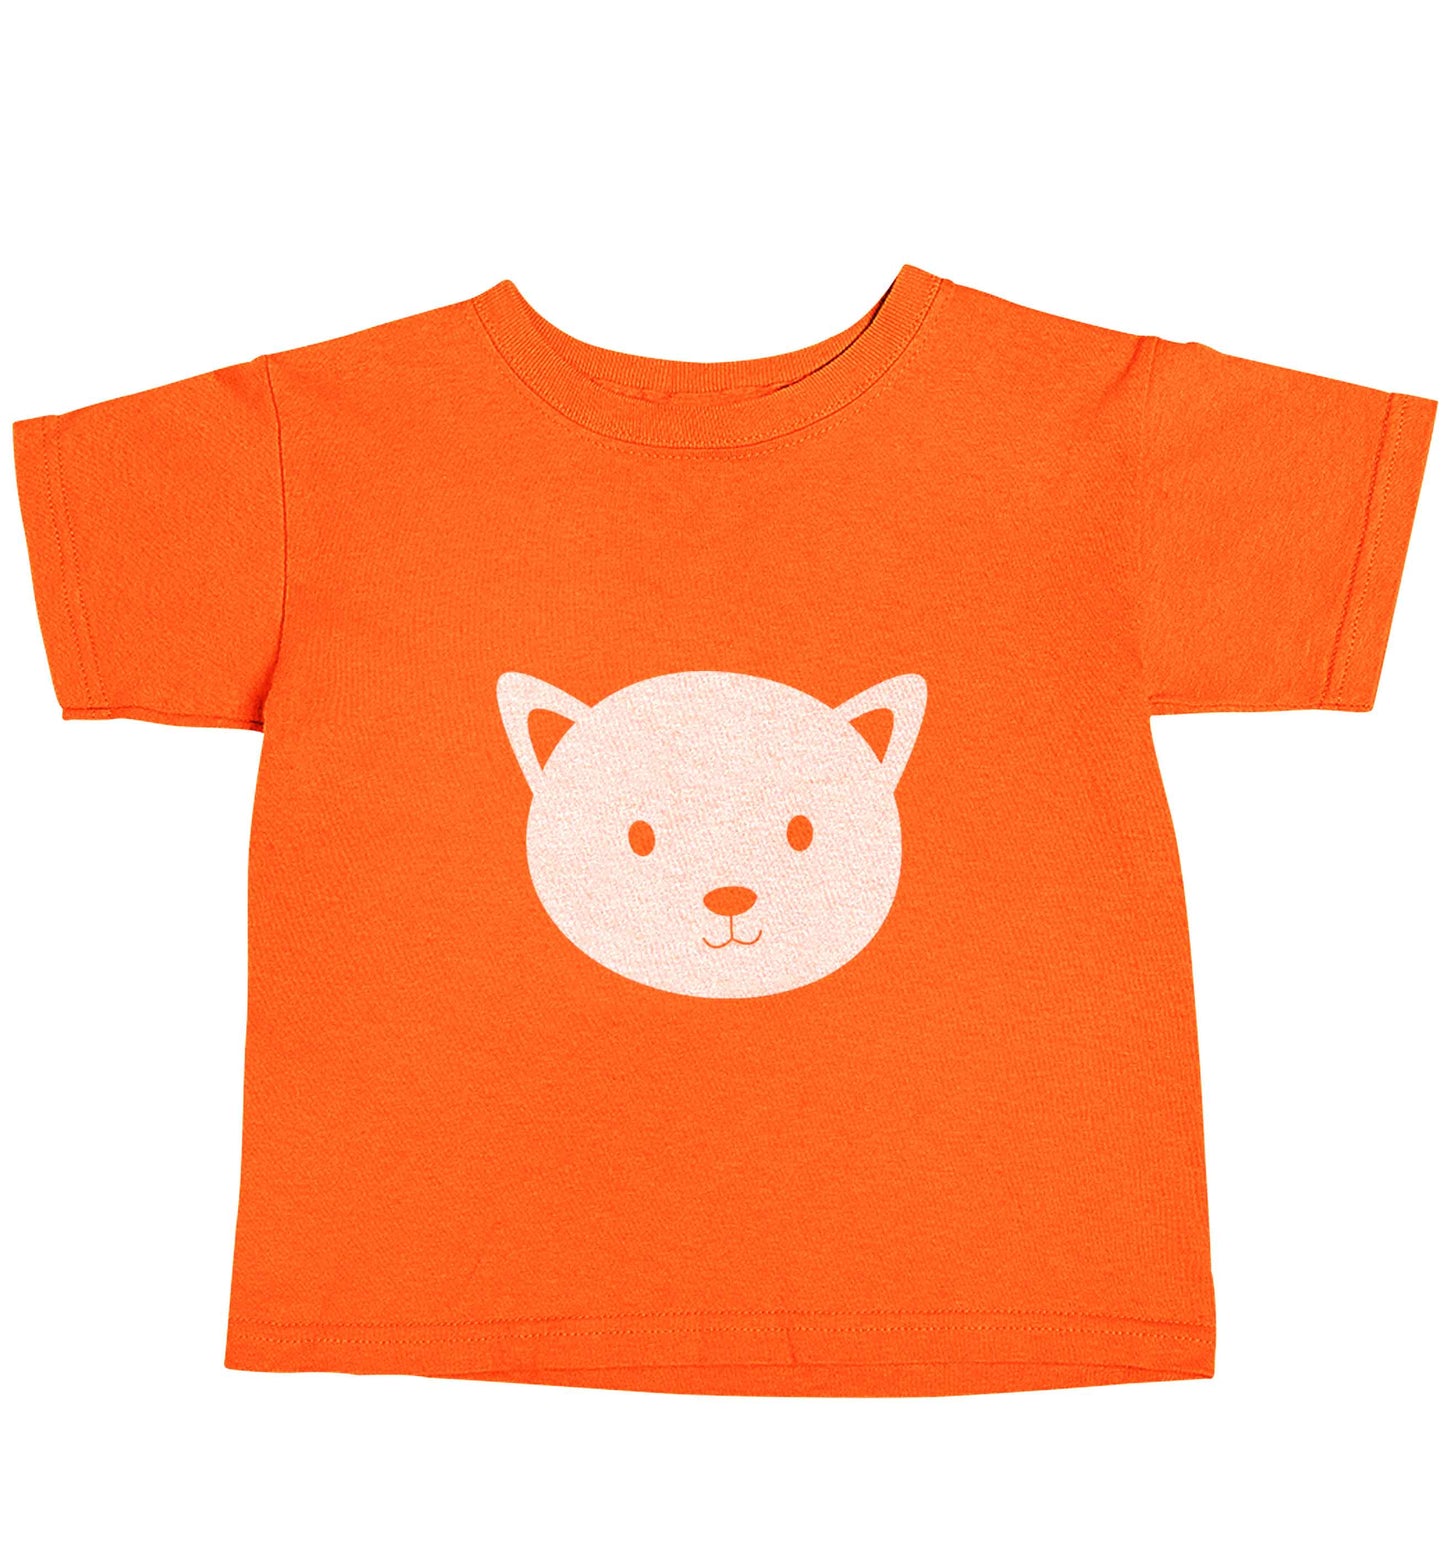 Cat face only Kit orange baby toddler Tshirt 2 Years